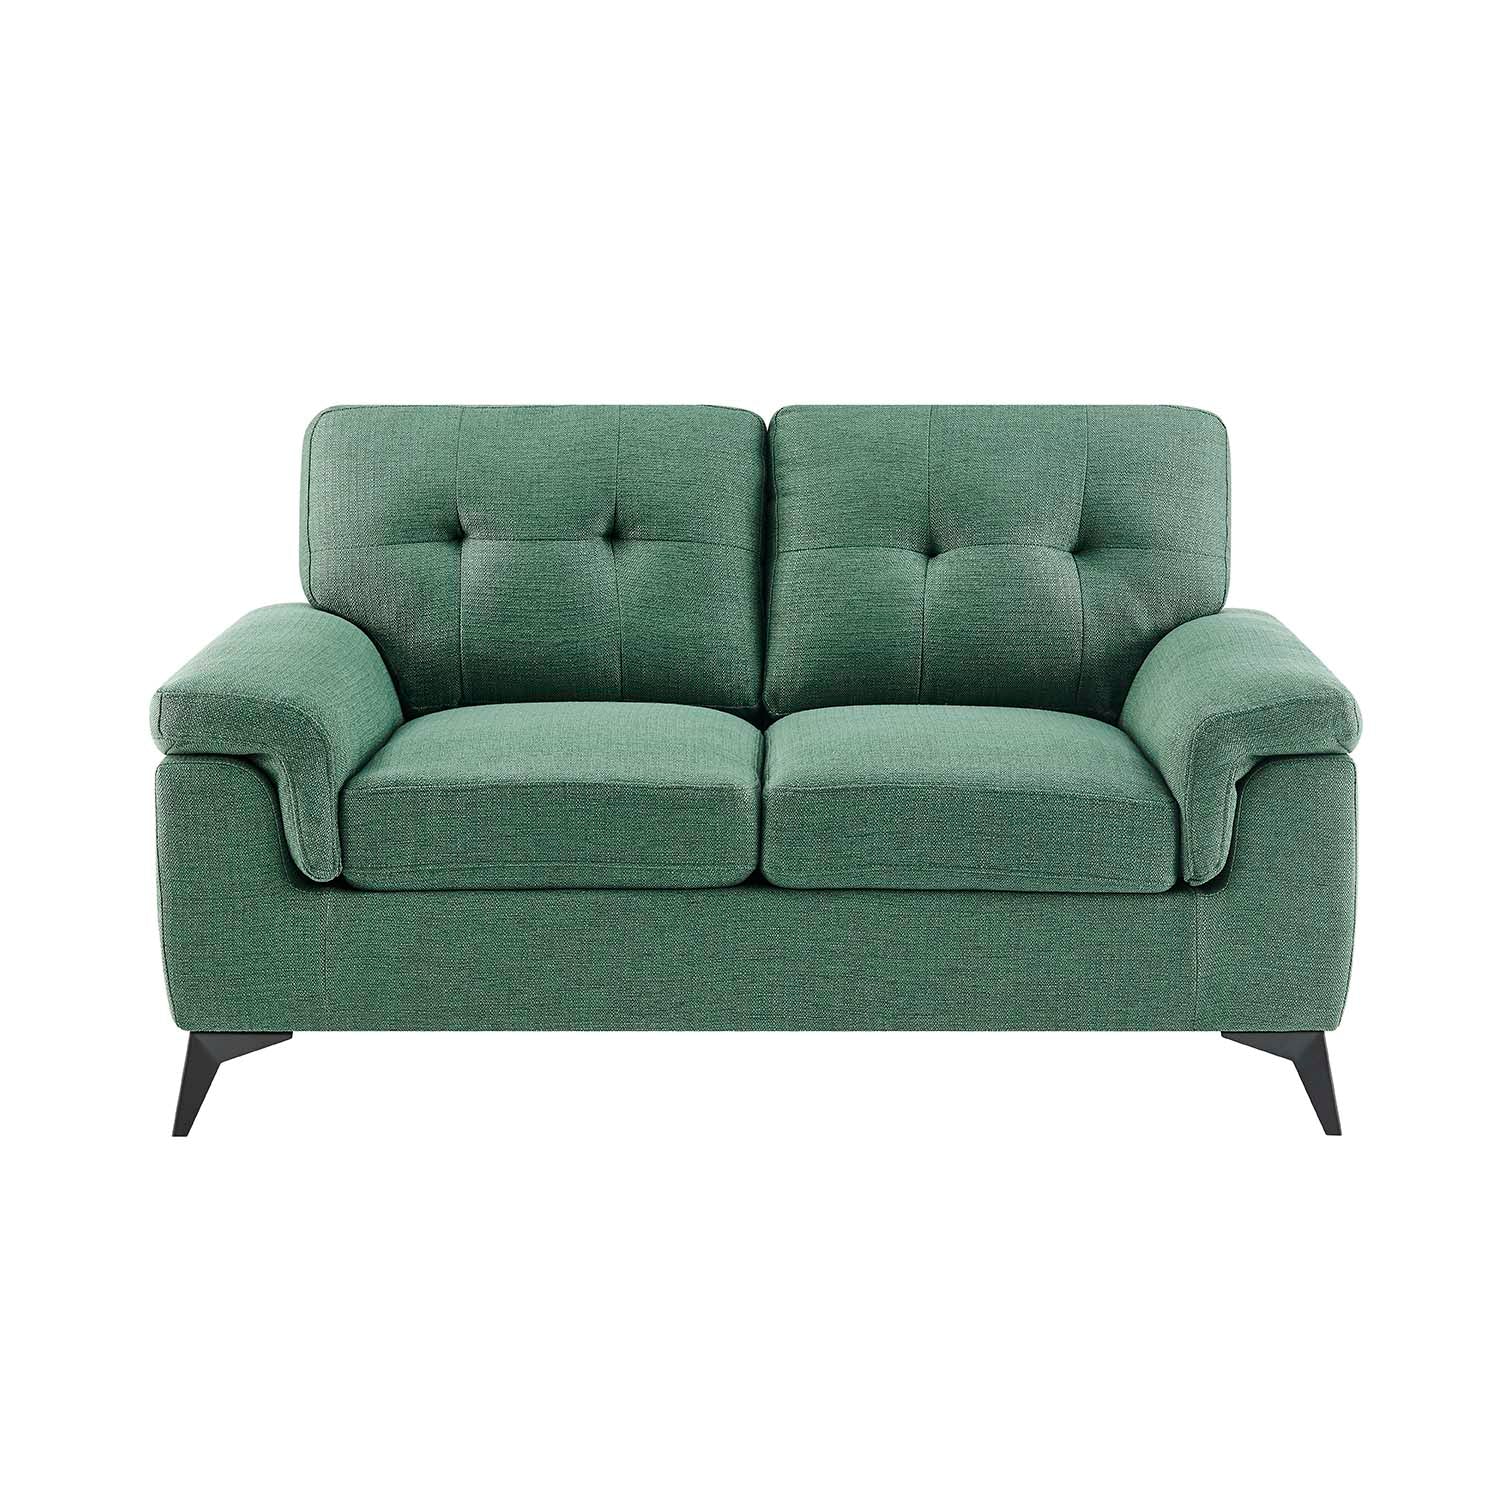 Ottawa Emerald Green 2 Seater Sofa